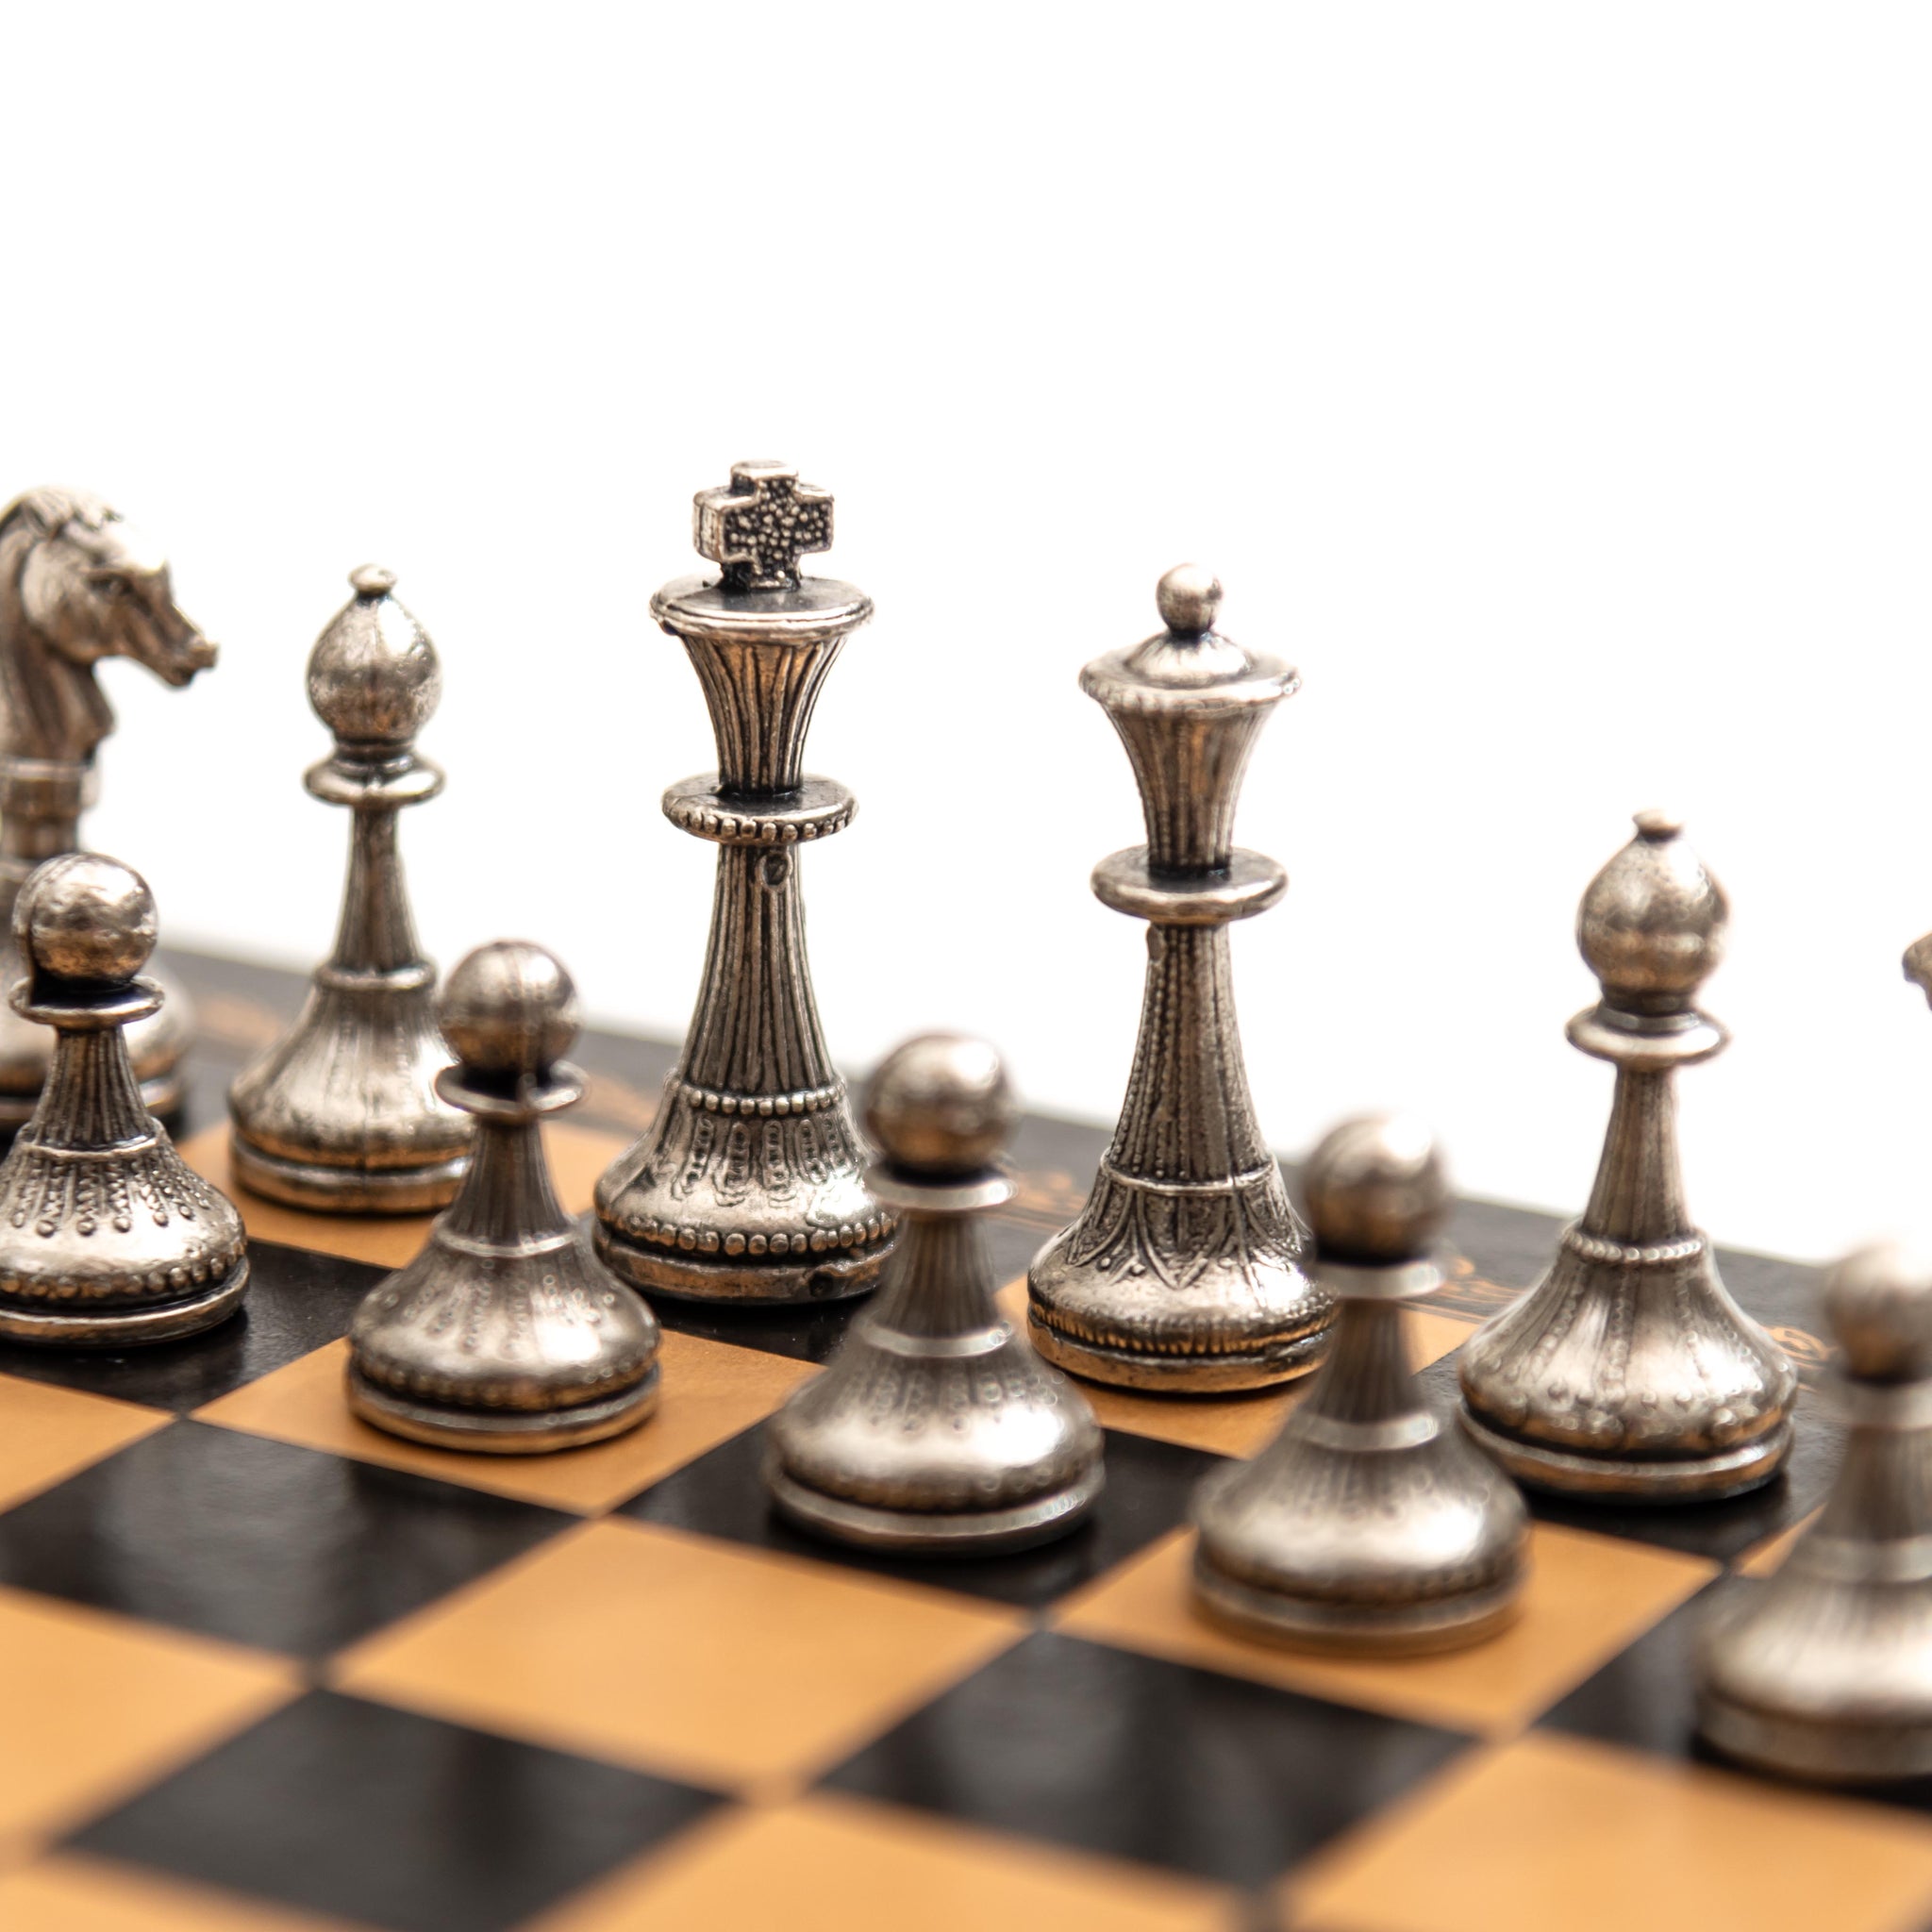 Brass/Wood Staunton Chess Set on Patterned Italian Leatherette Board